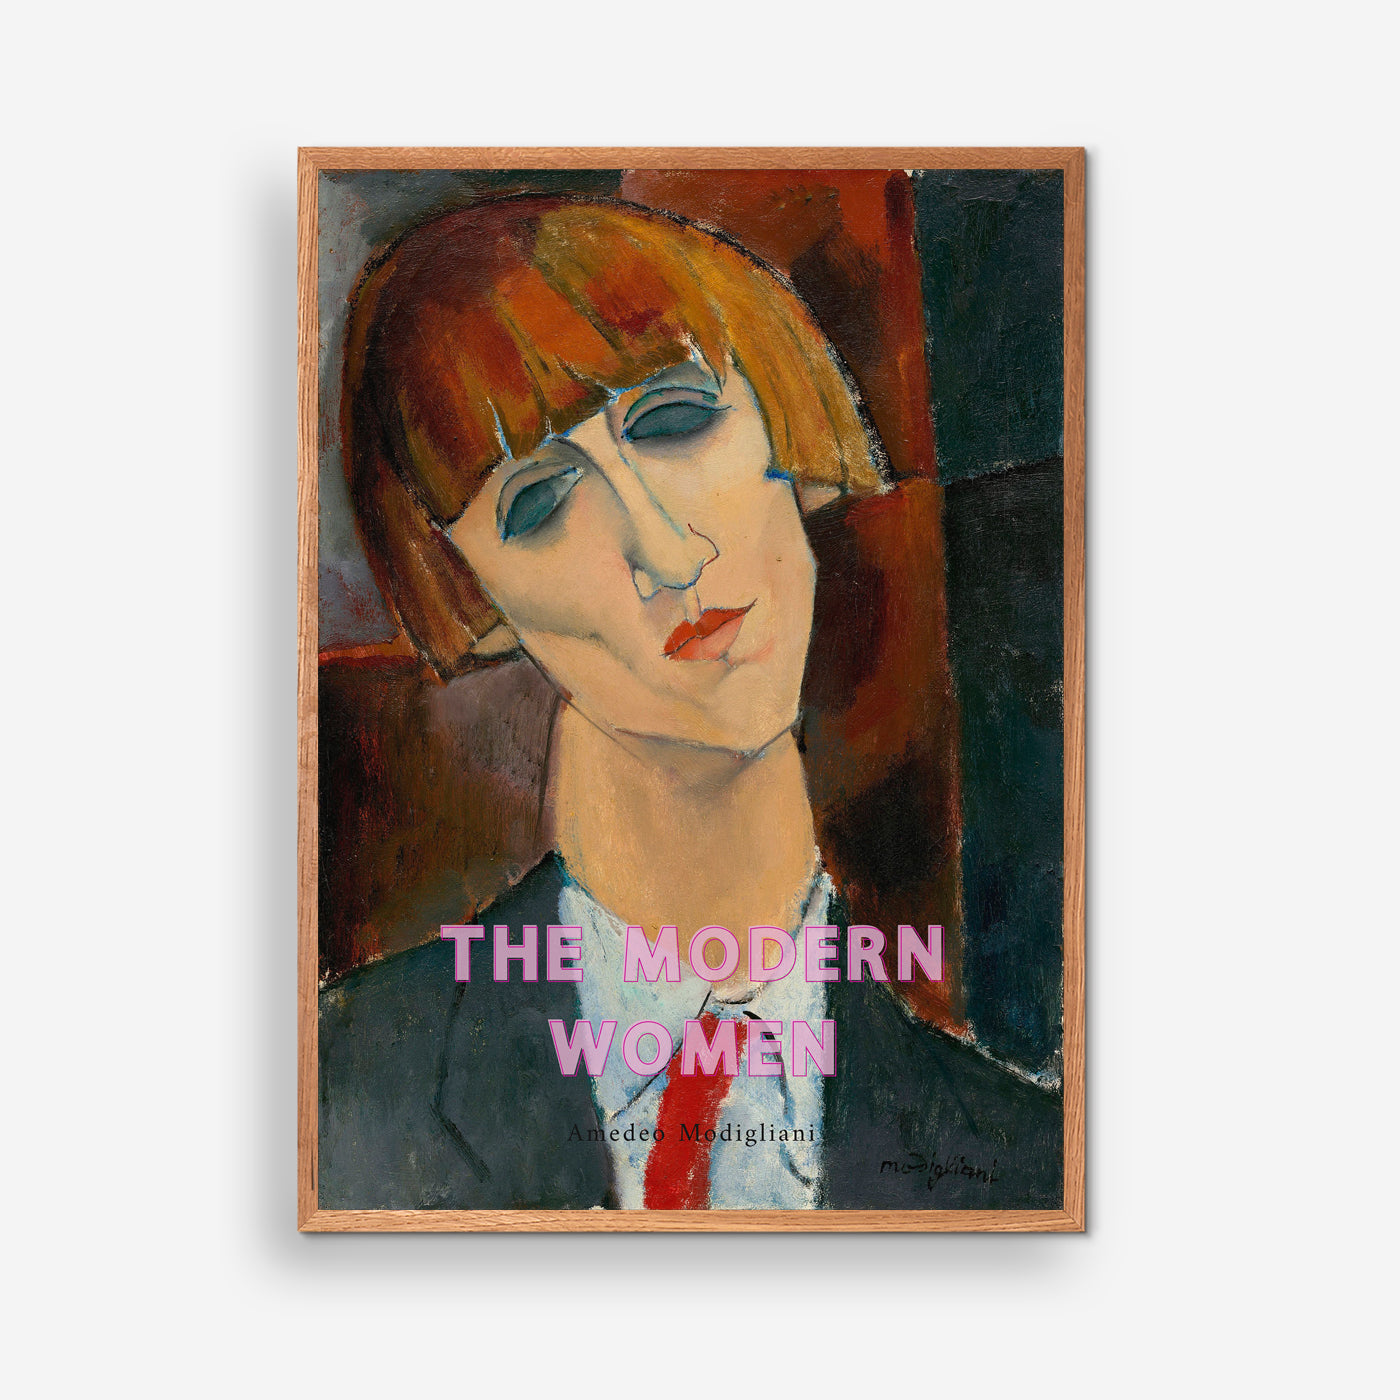 The Modern Woman - Amedeo Modigliani